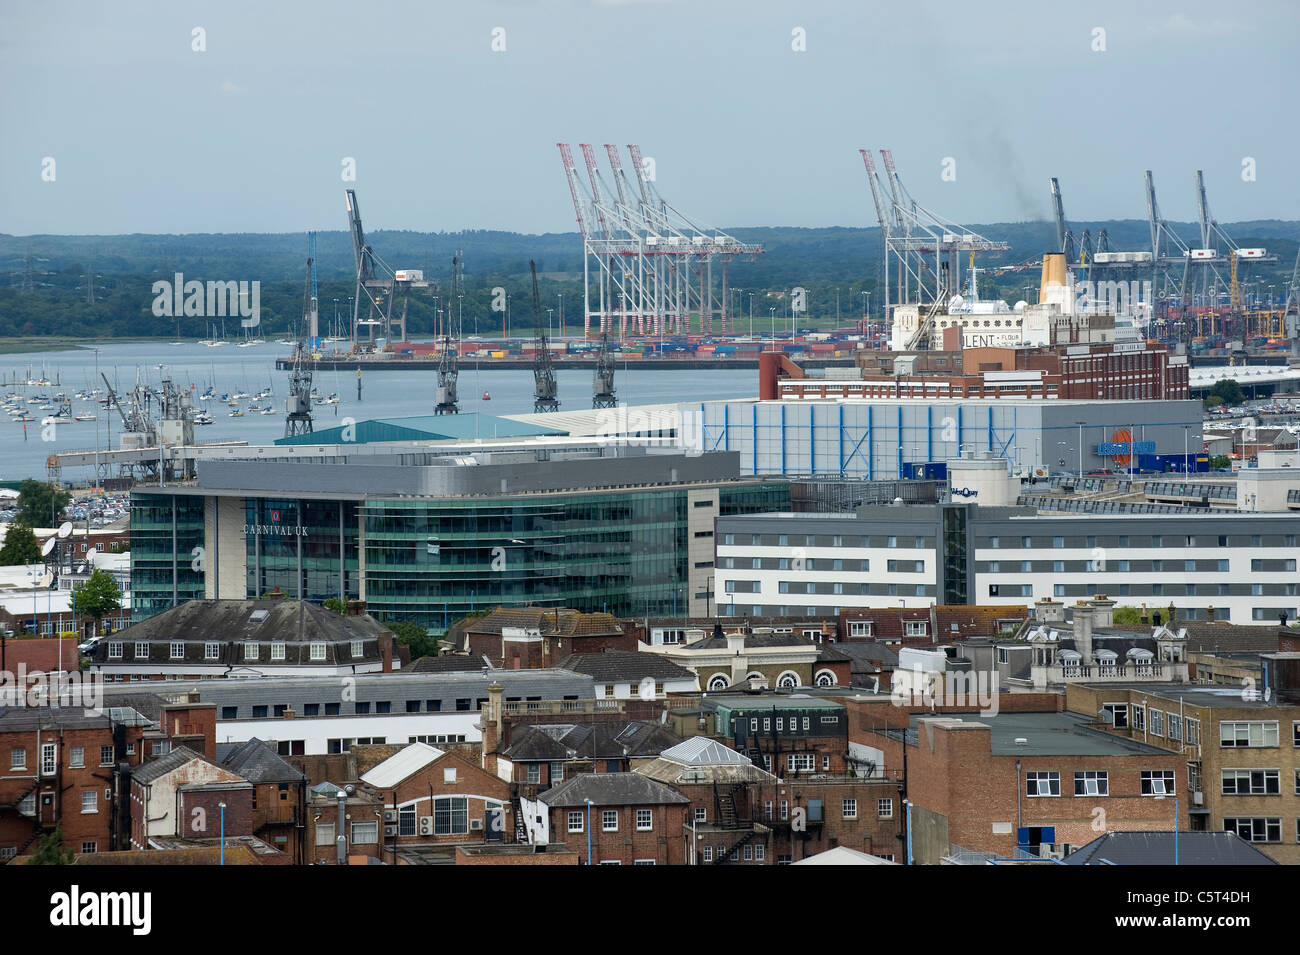 Southampton City centre, England - rooftop view Stock Photo